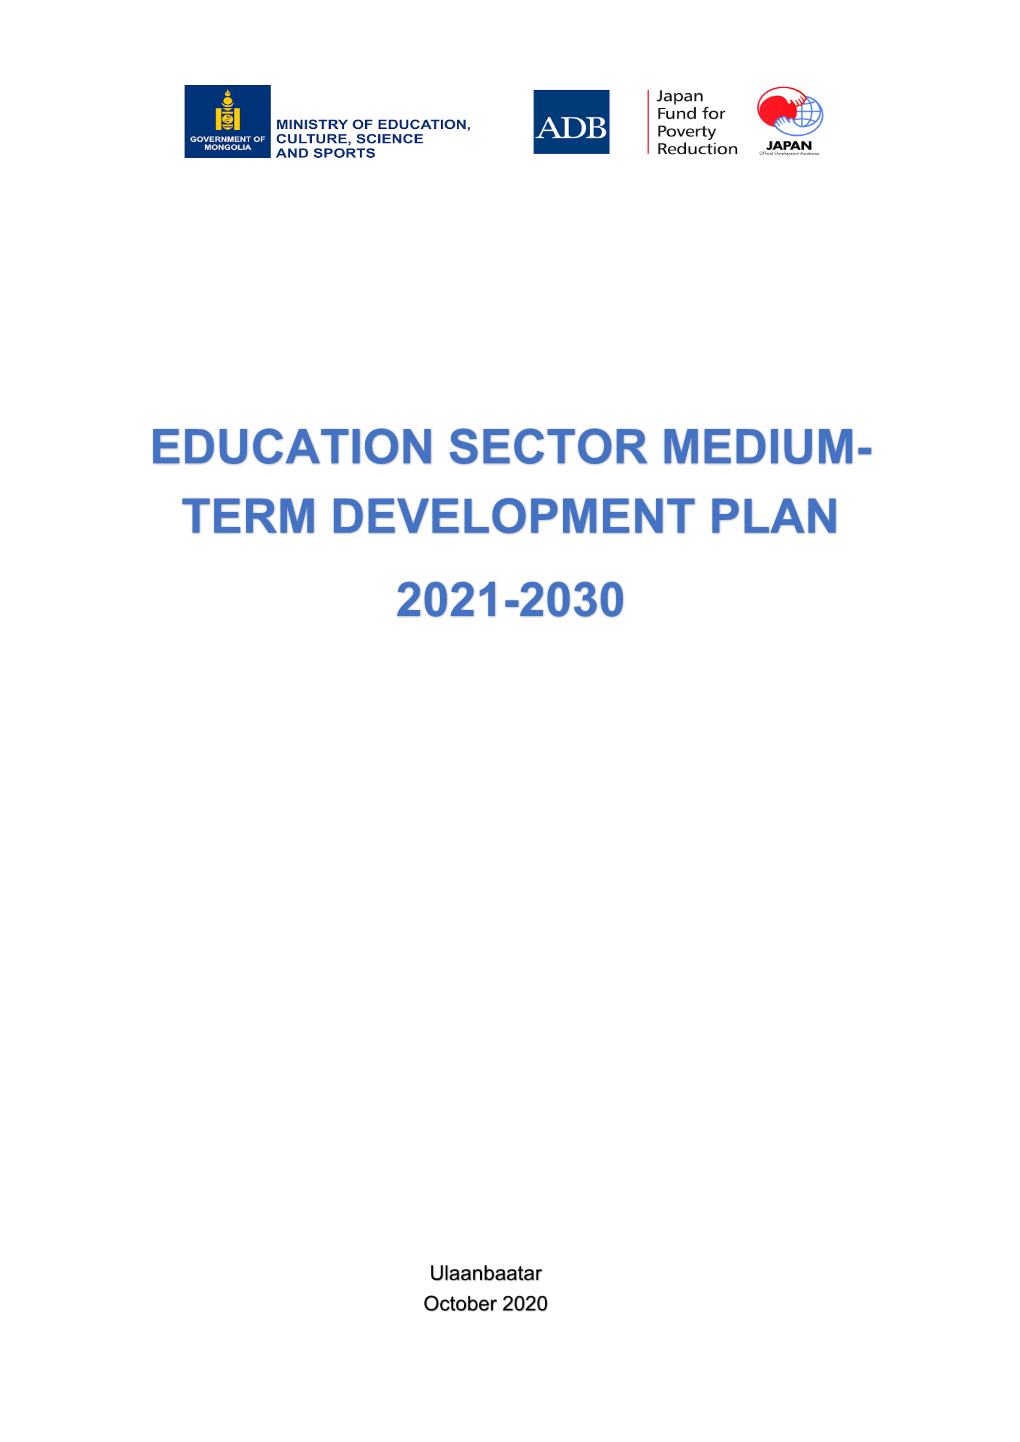 Education Sector Medium Term Development Plan 2021-2030